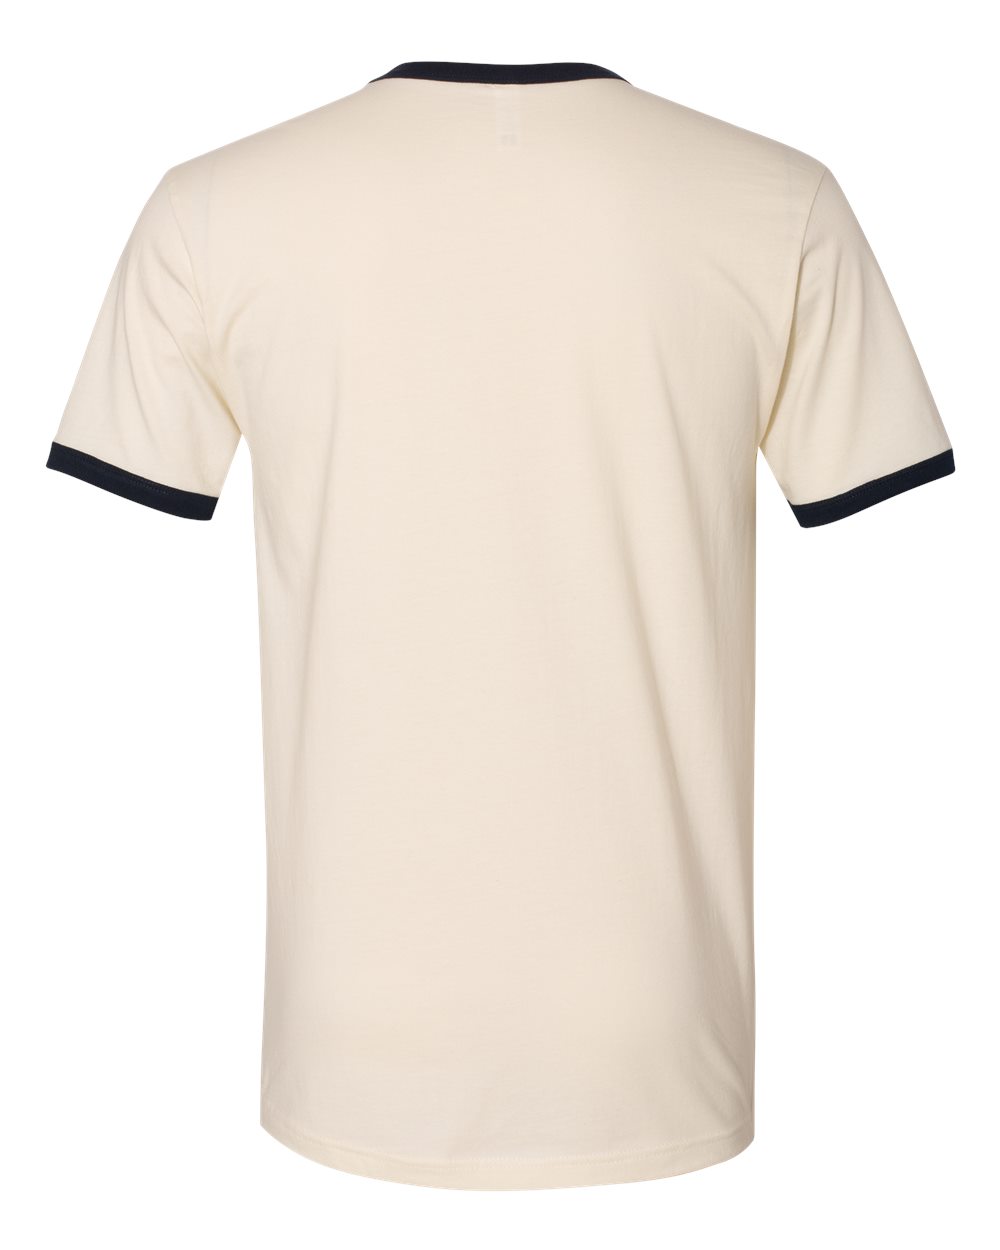 Next Level Unisex Fine Jersey Ringer Tee Shirt 3604 Blank Plain Solid ...